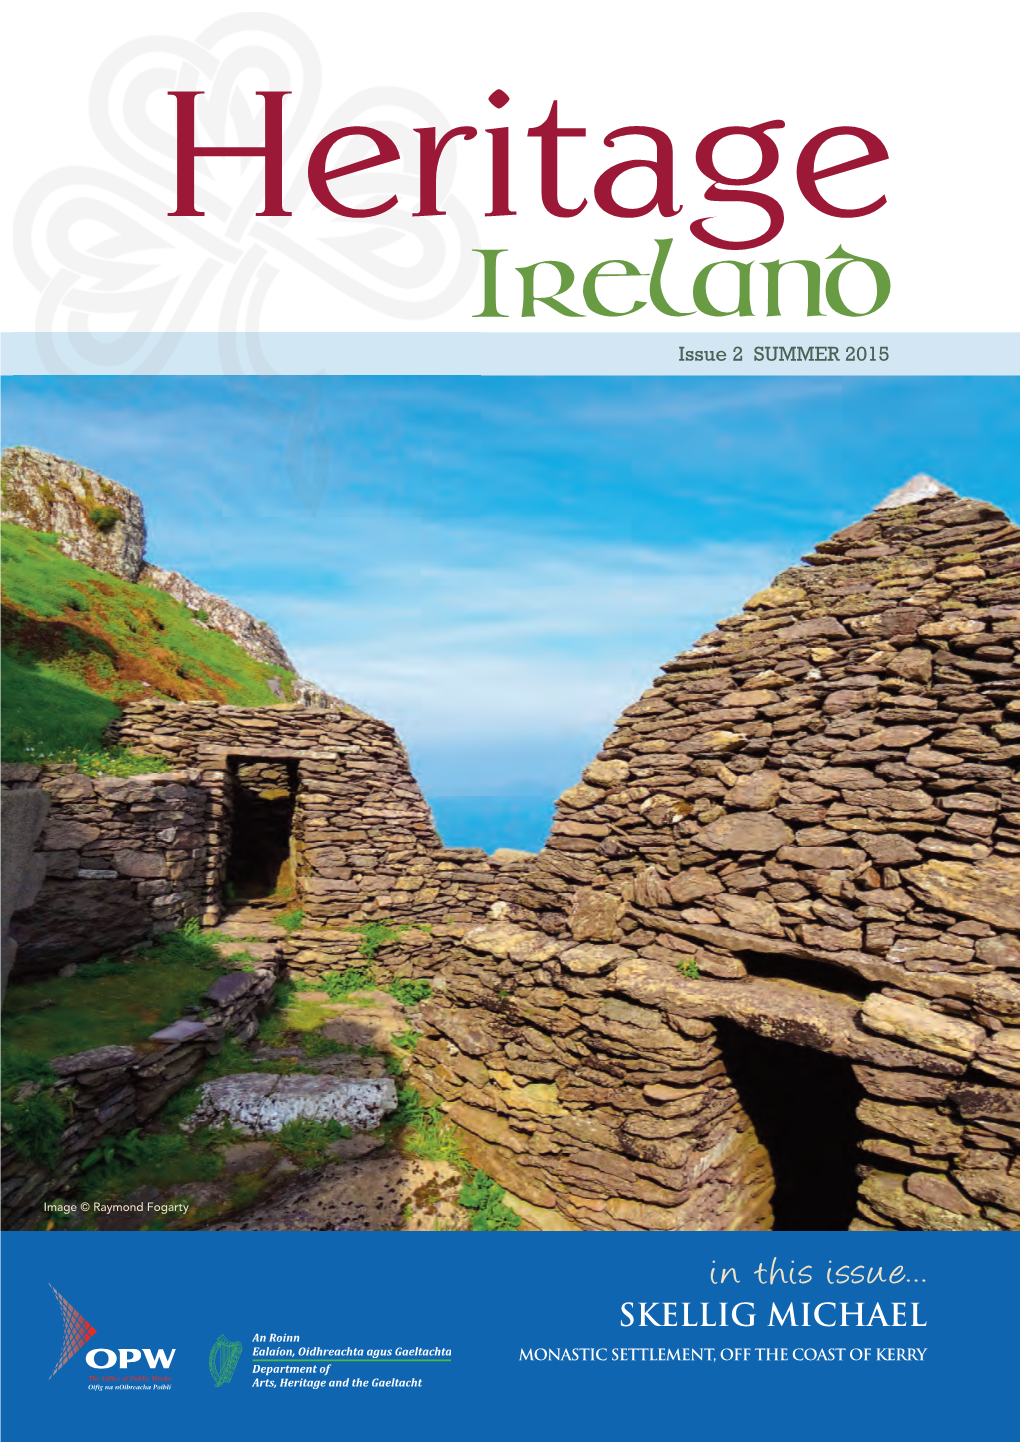 IRELAND Issue 2 SUMMER 2015